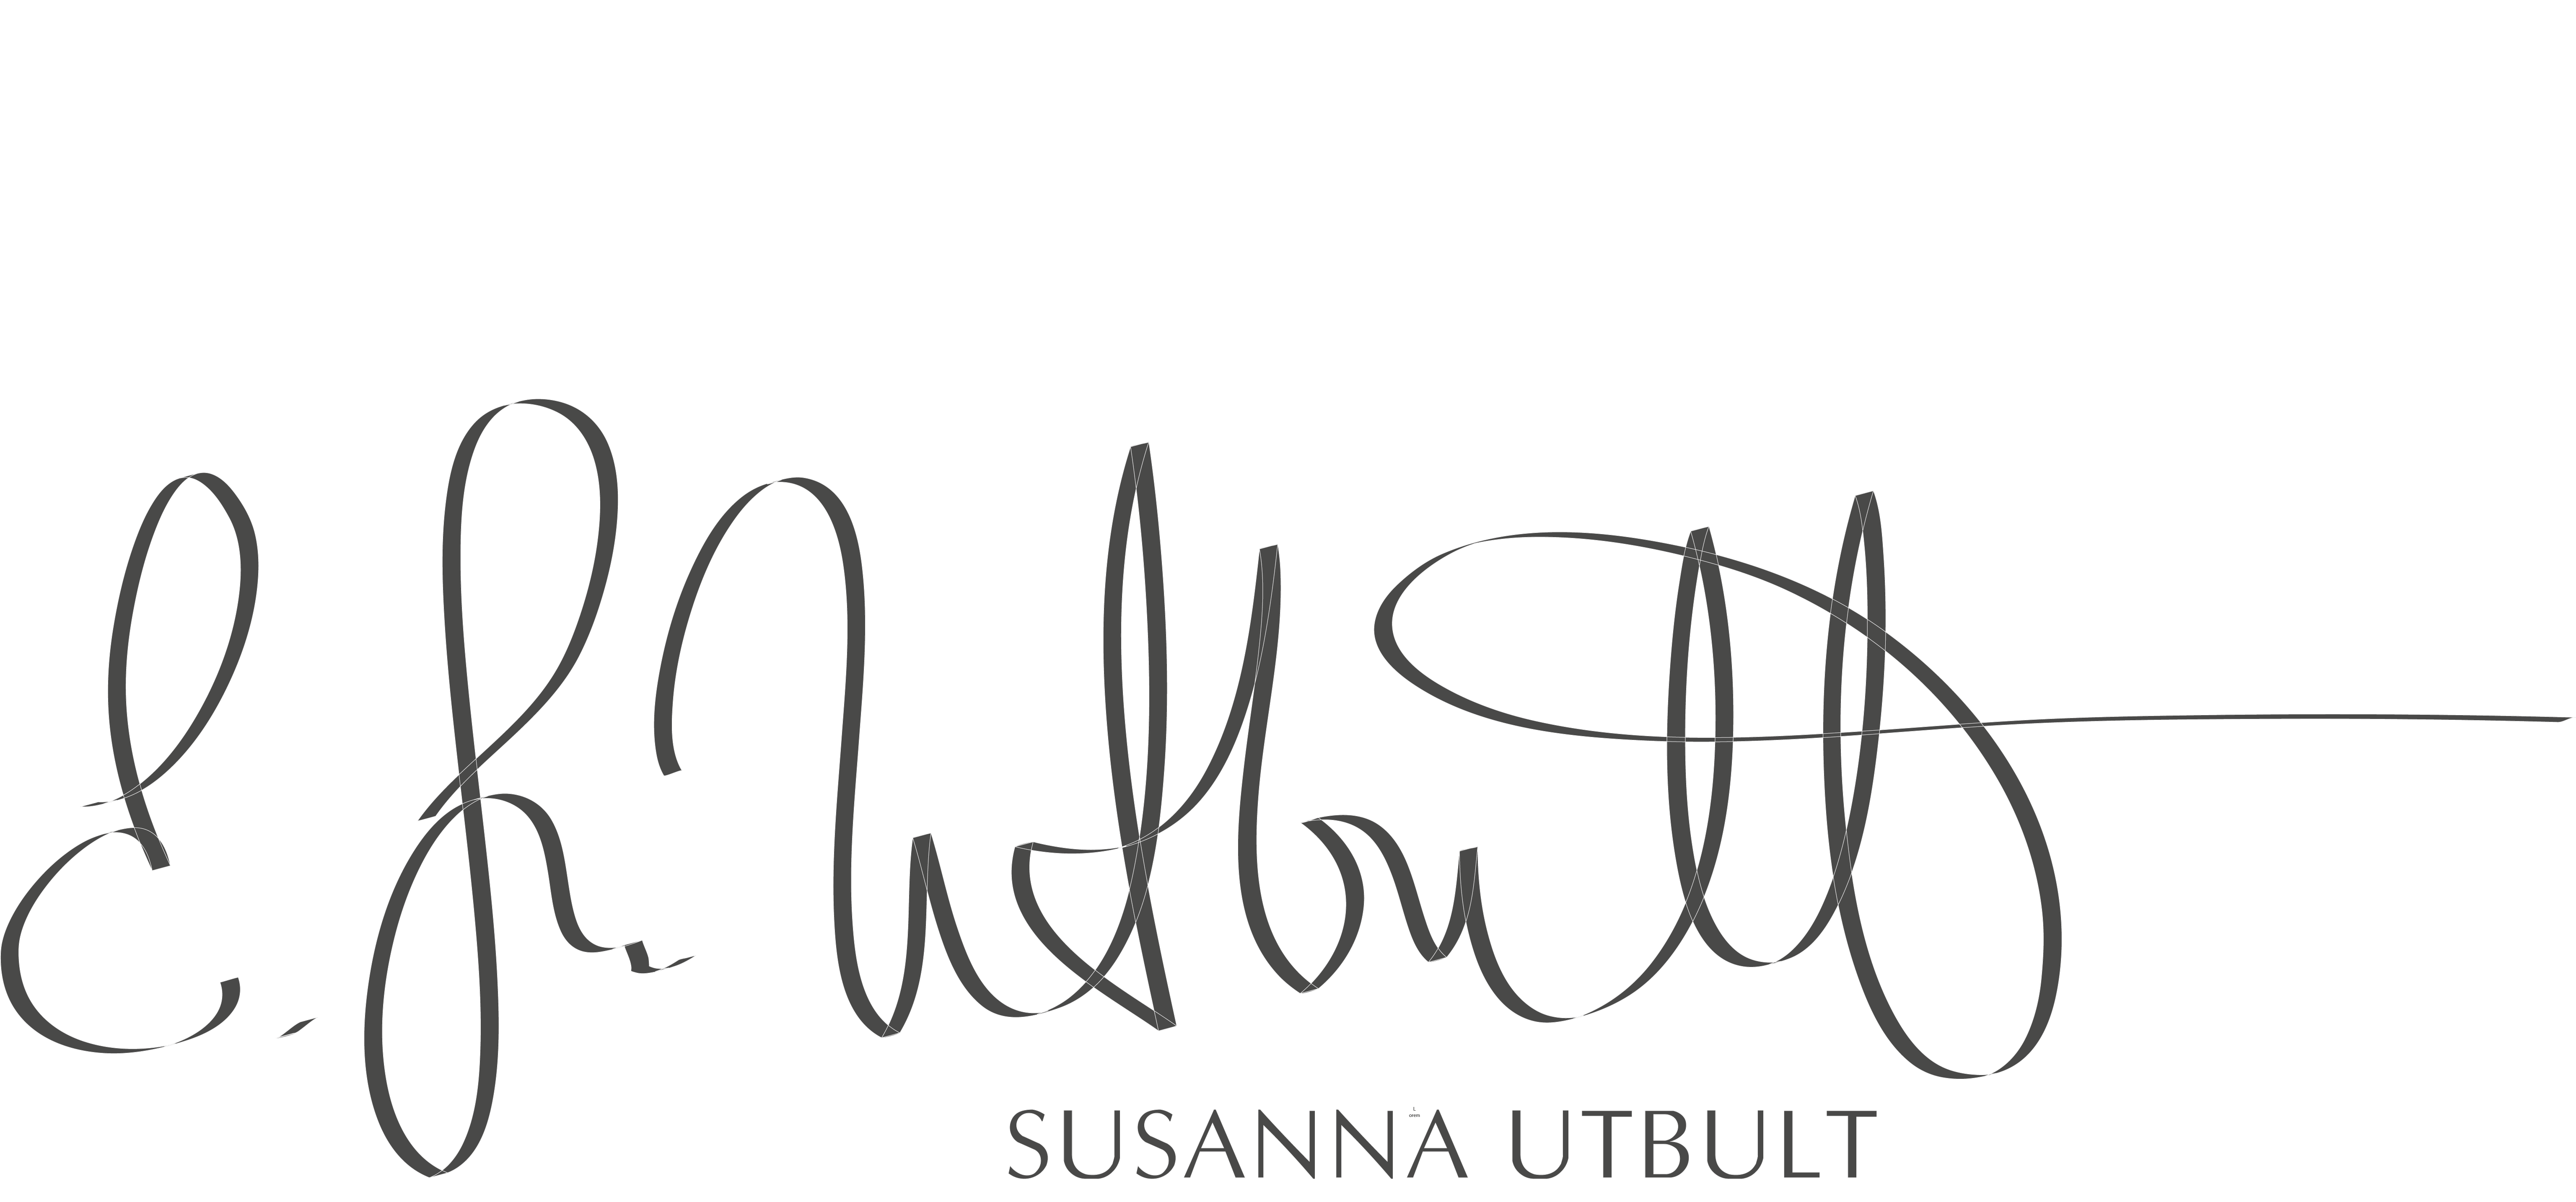 Susanna Utbult